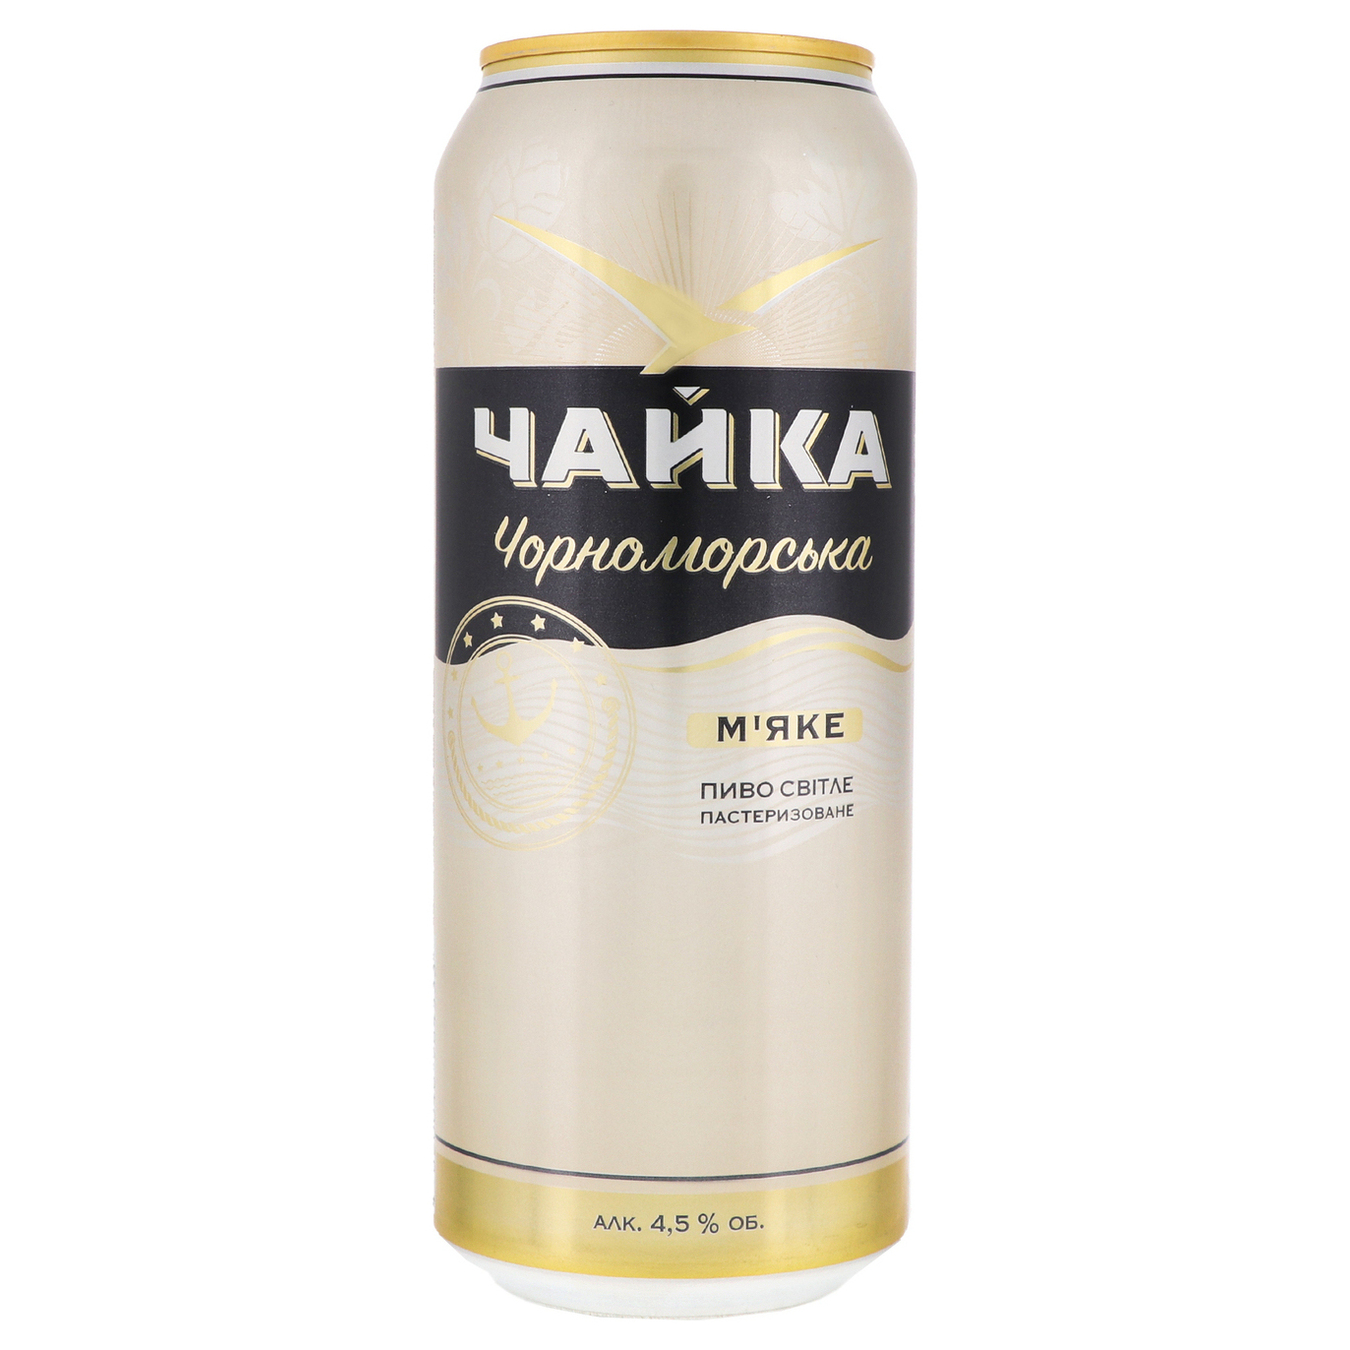 Chayka Chornomorsʹka Mild light filtered pasteurized Beer 4,5% 500ml